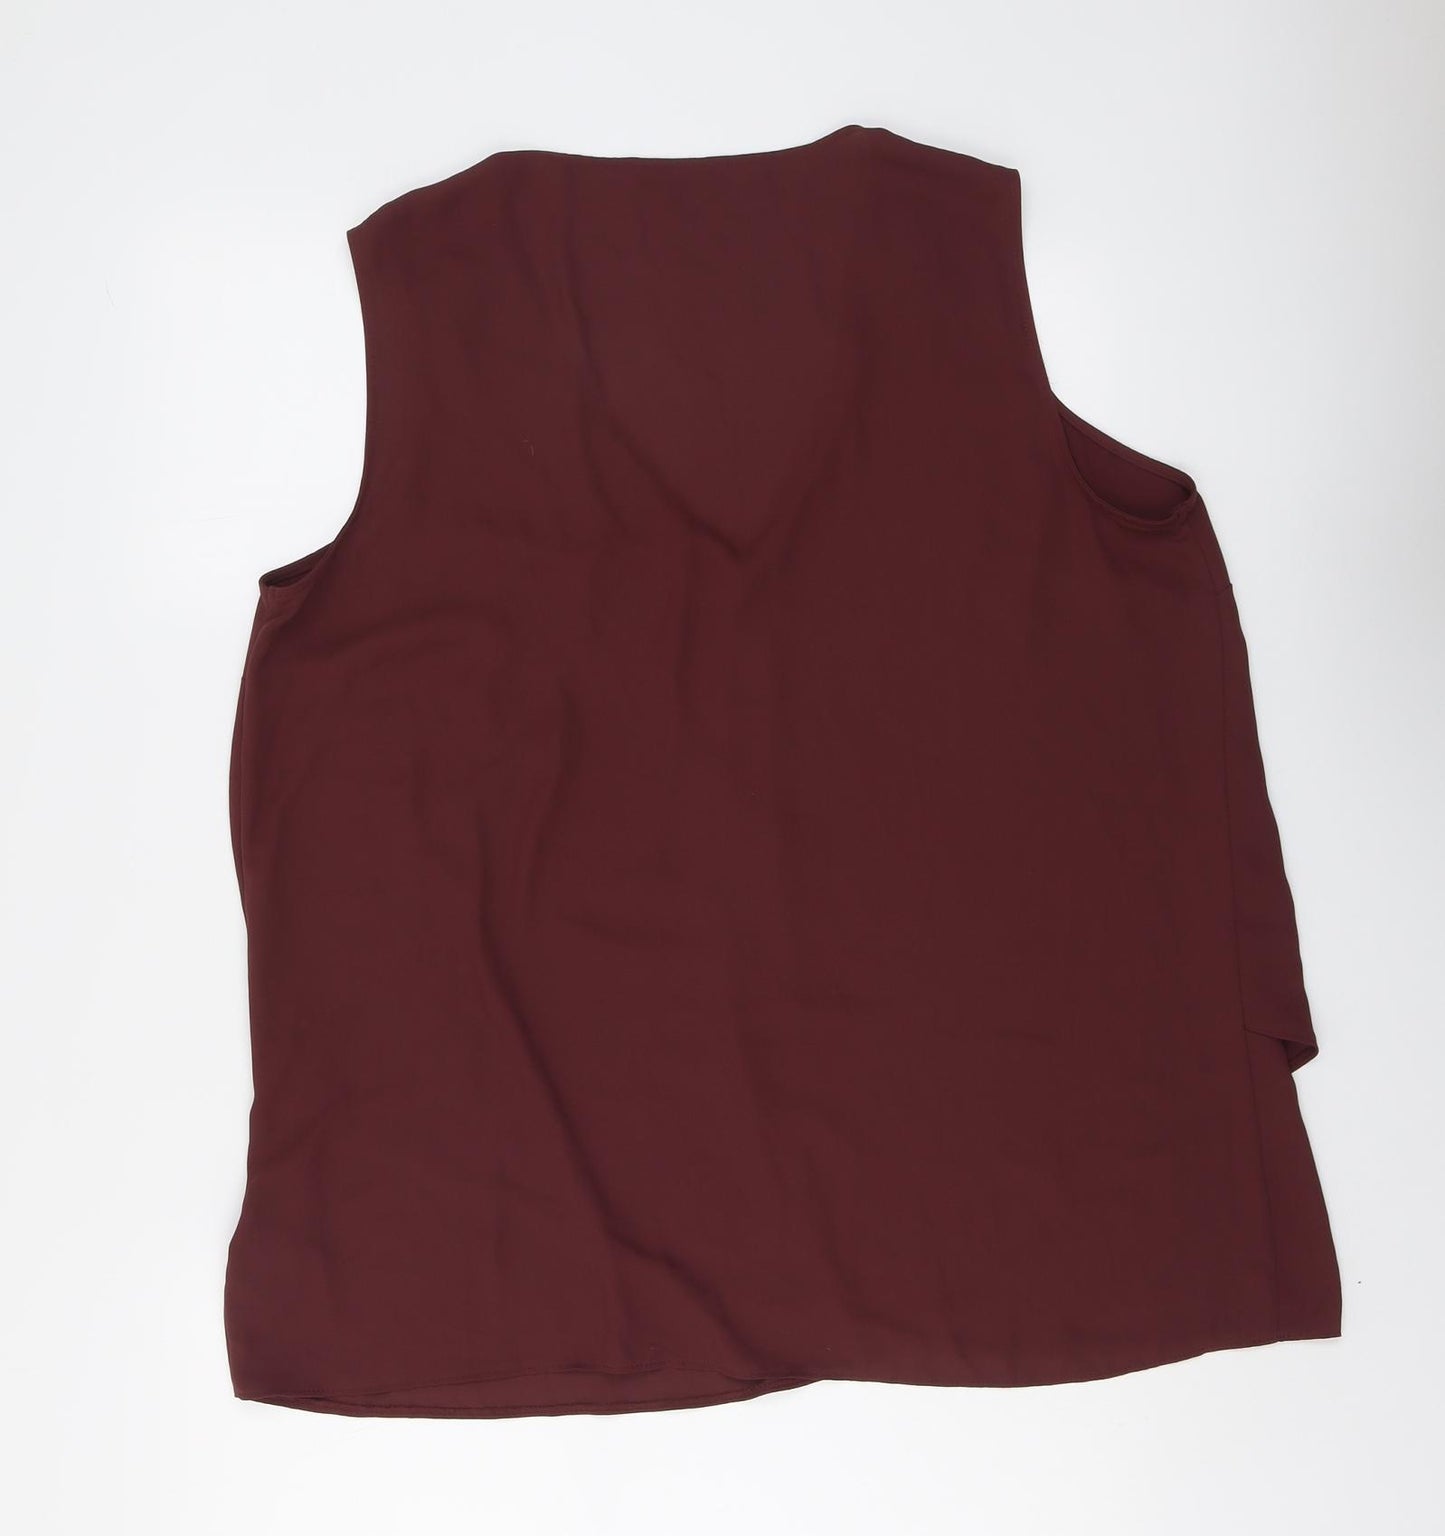 NEXT Womens Red Polyester Basic Blouse Size 20 V-Neck